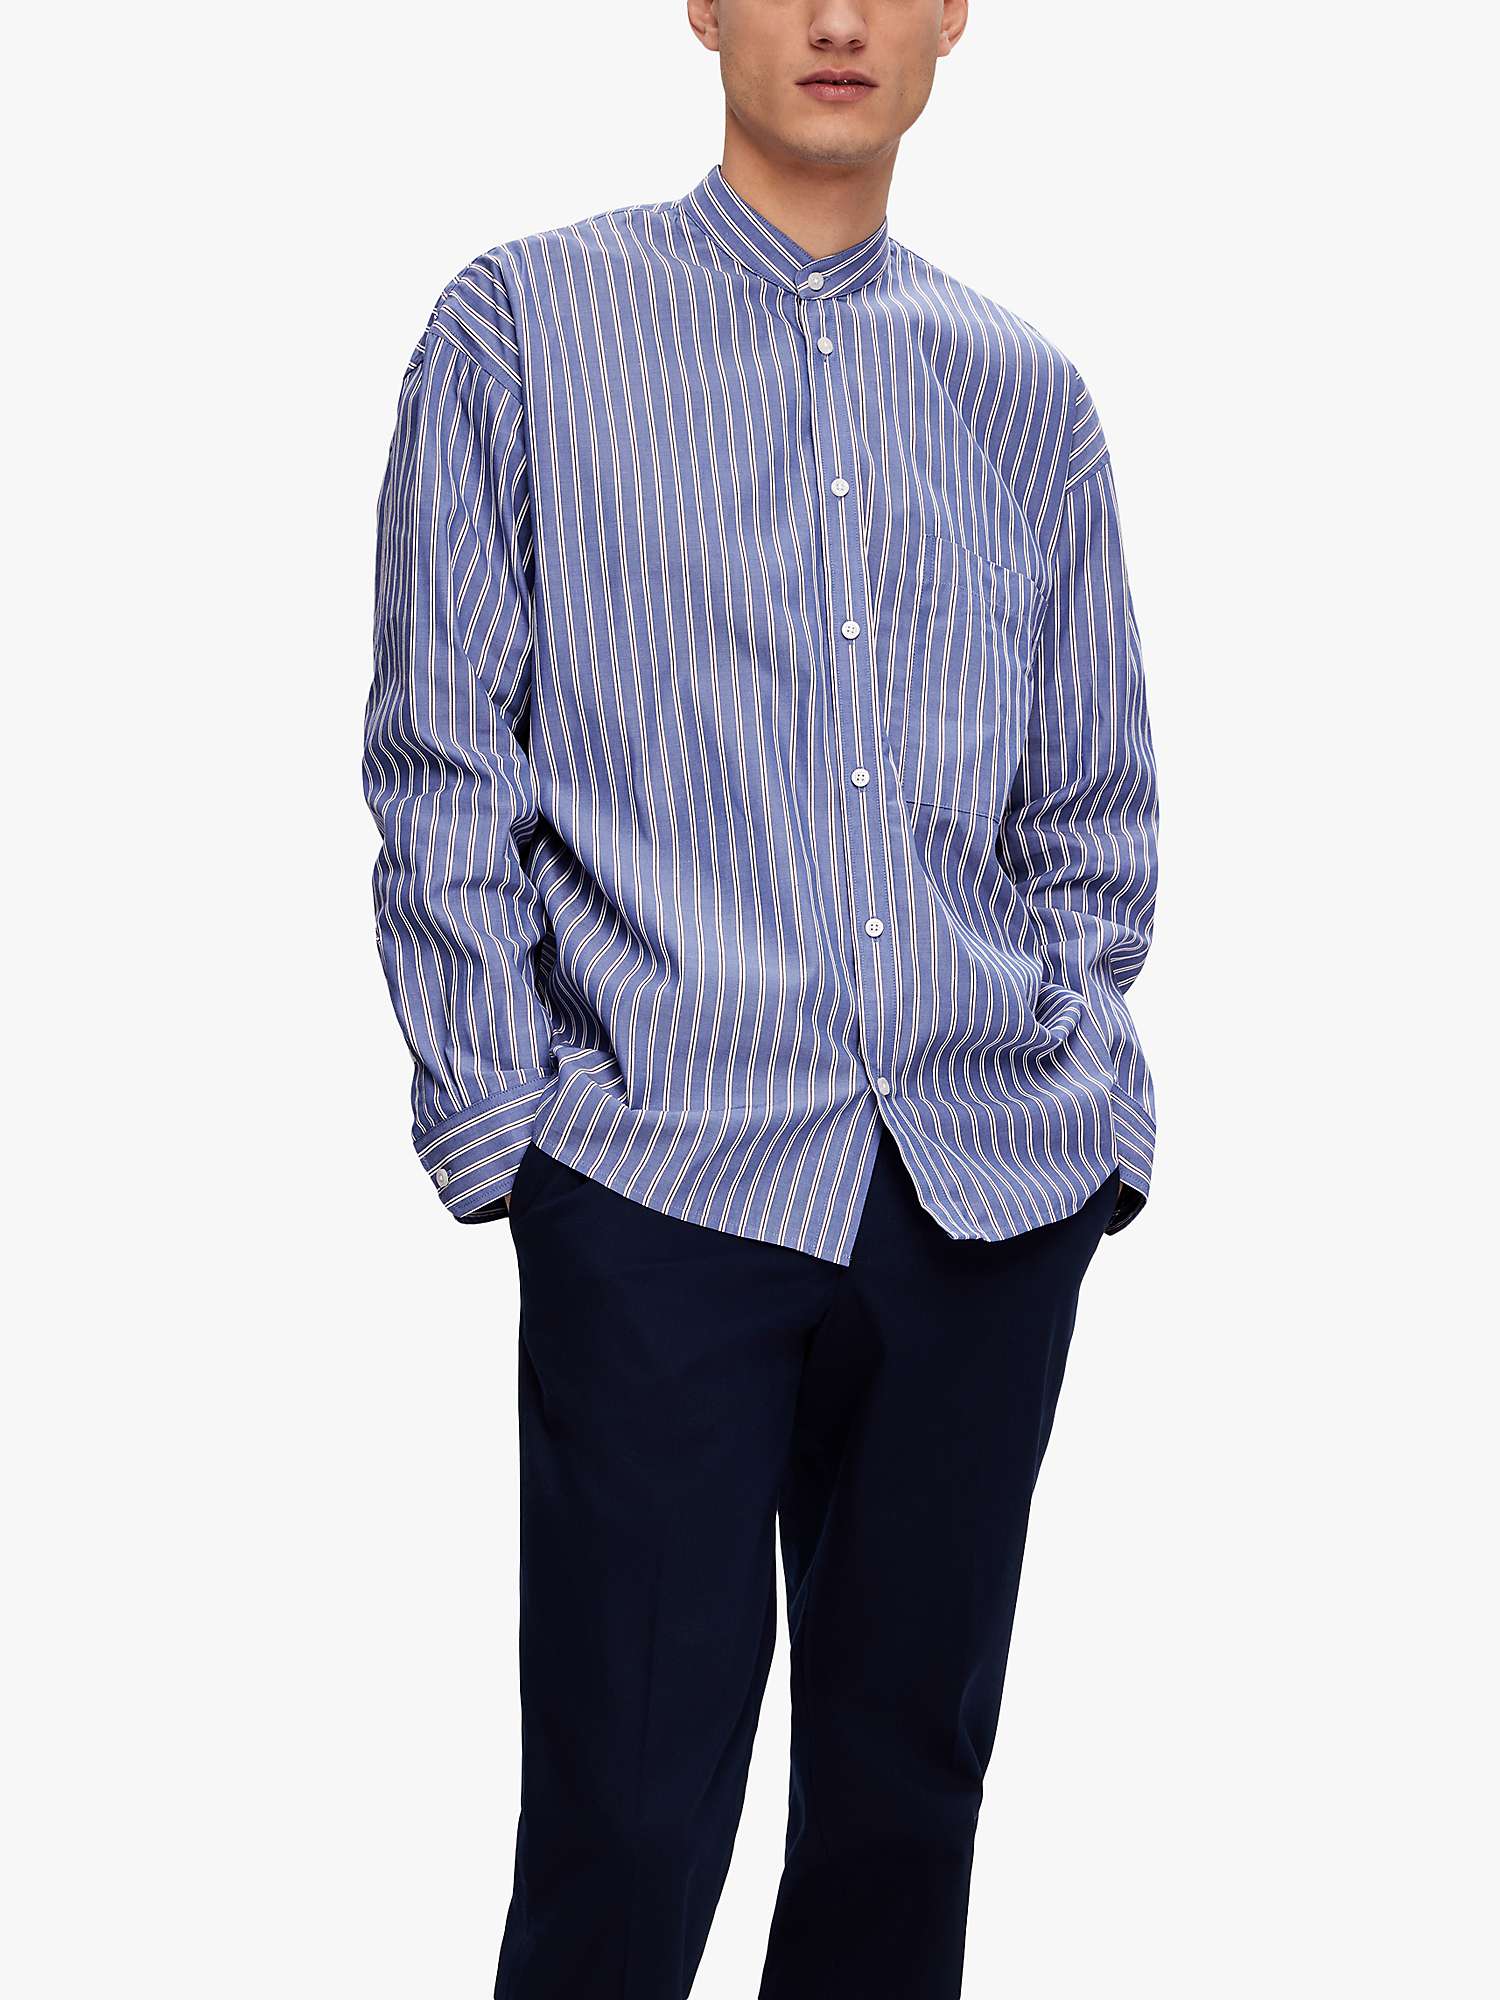 Buy SELECTED HOMME Stripe Formal Long Sleeve Shirt Online at johnlewis.com